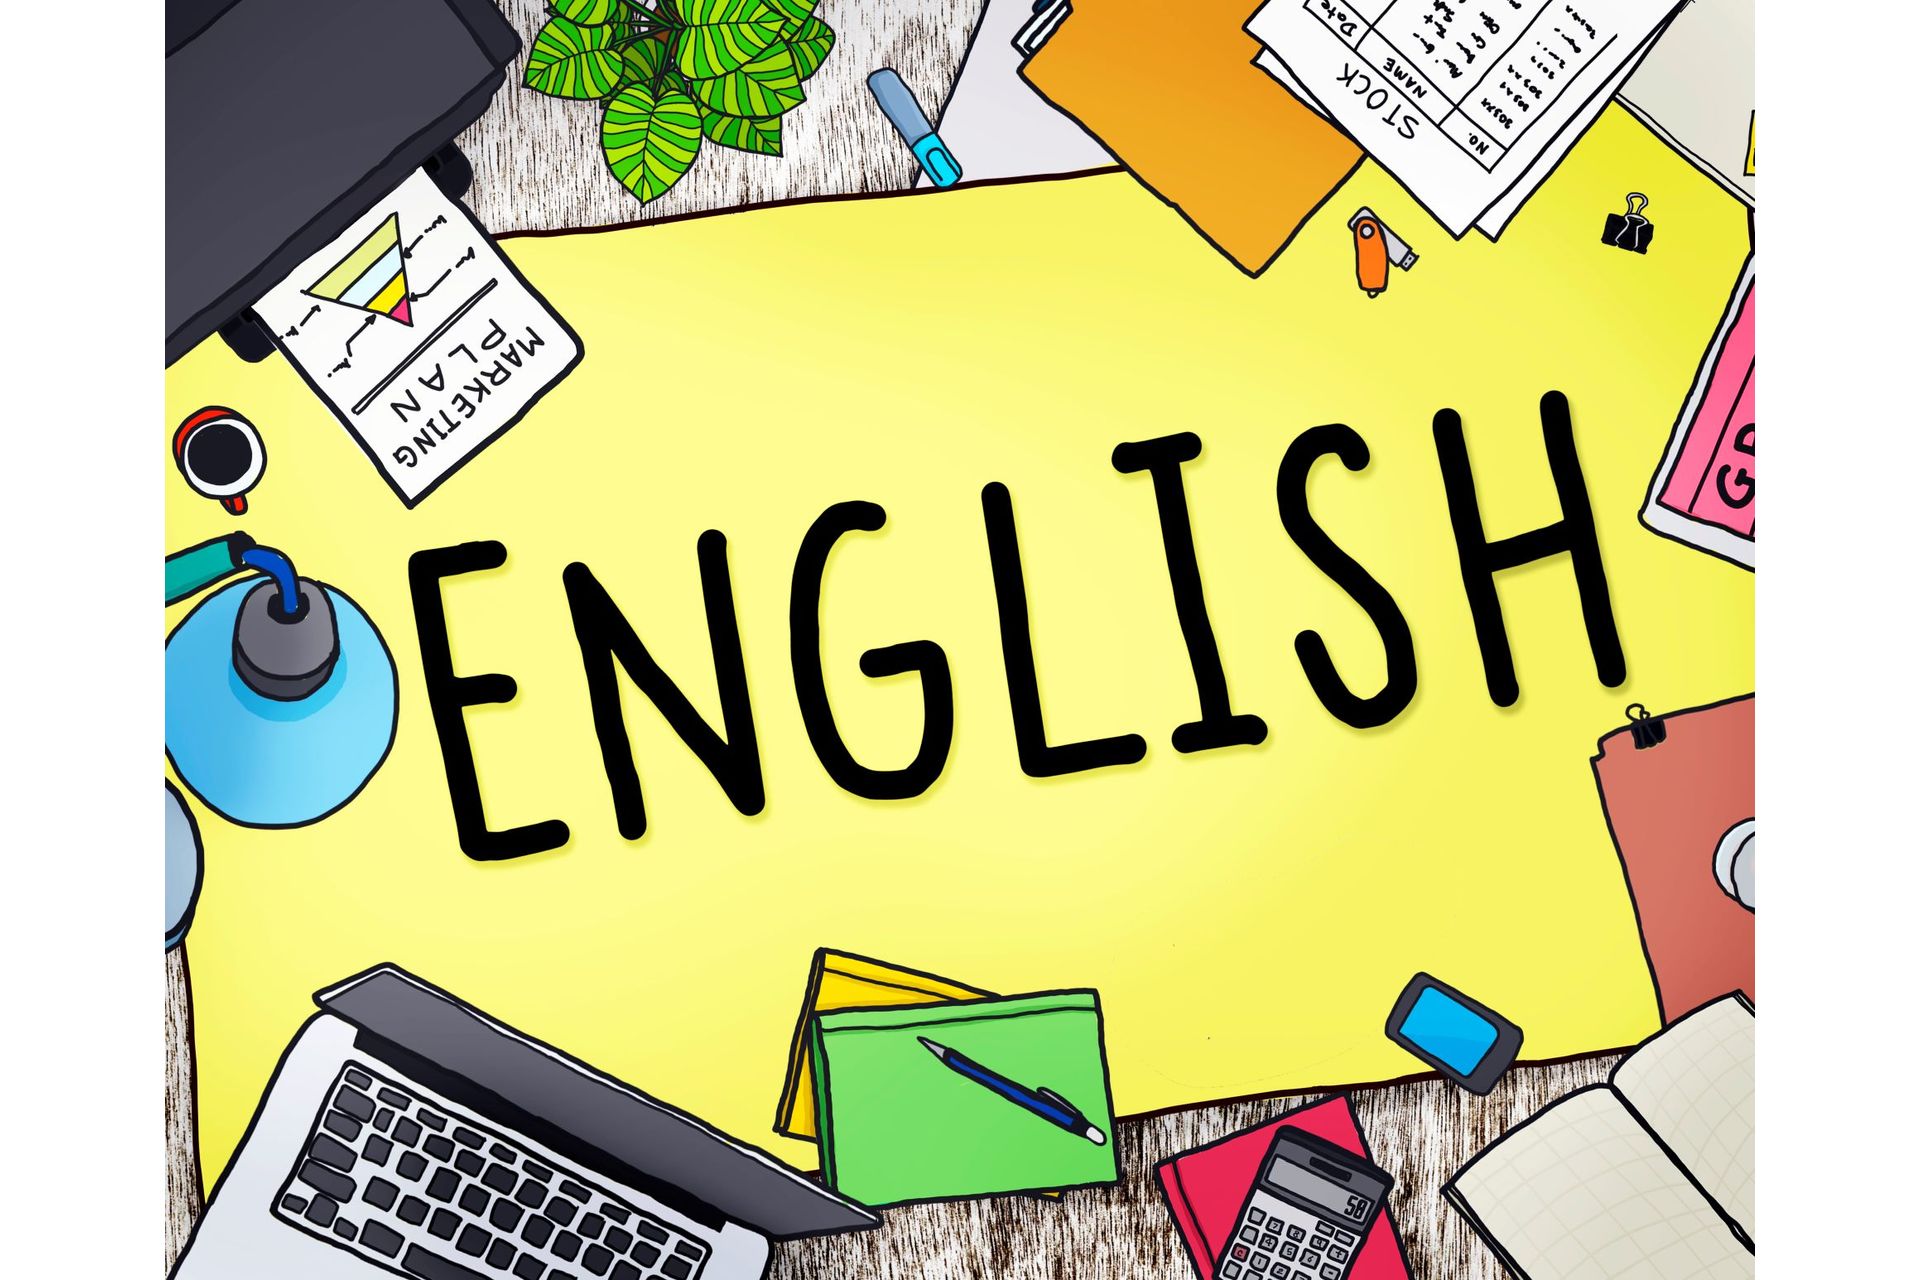 english-british-england-language-education-concept